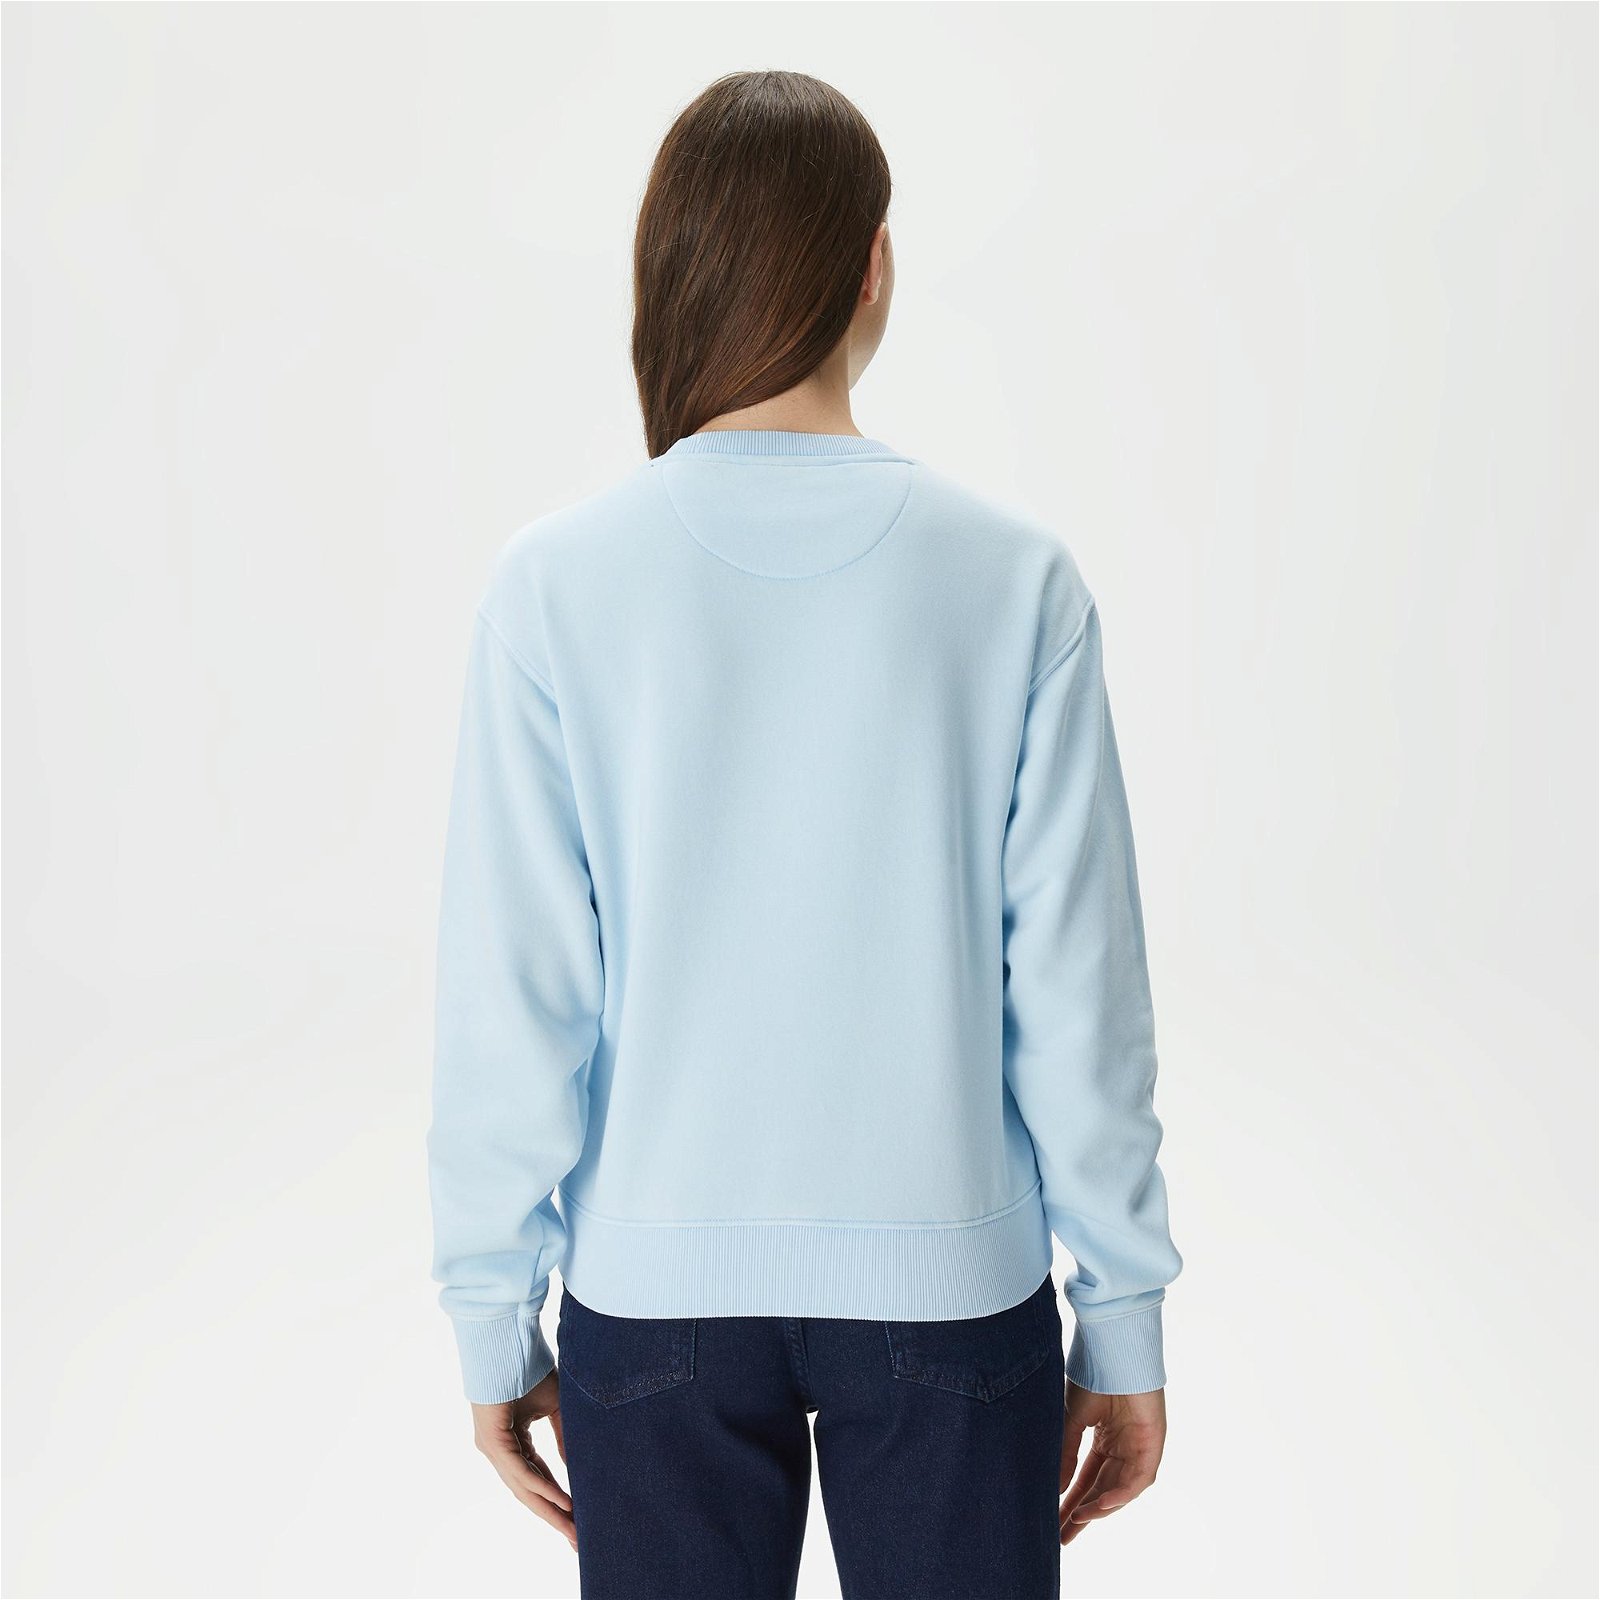 Guess CN Stones Kadın Mavi Sweatshirt